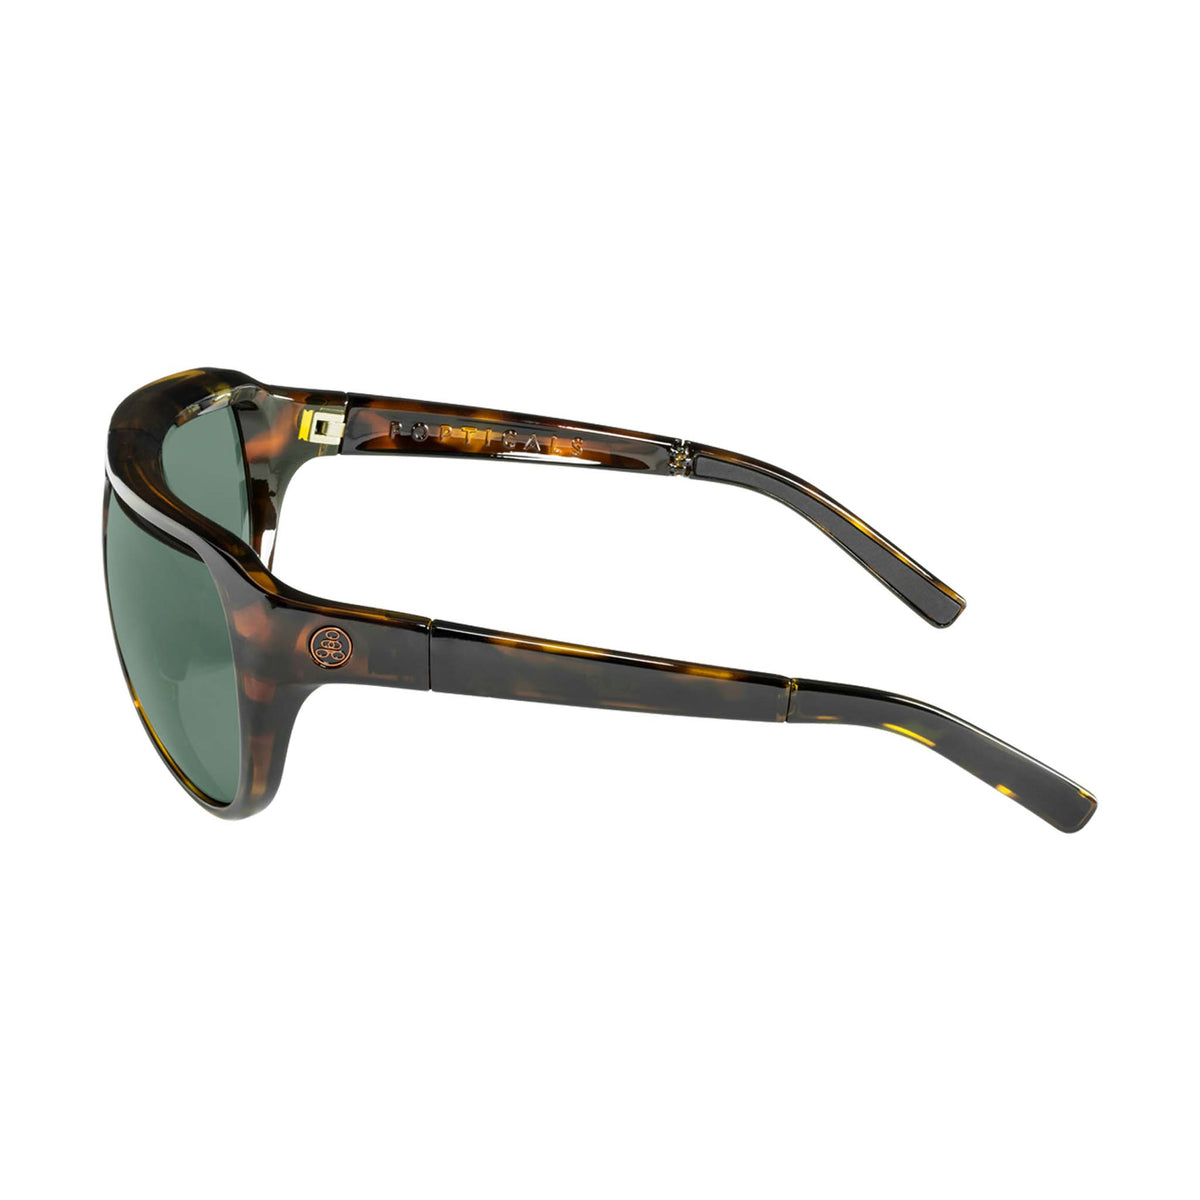 Popticals, Premium Compact Sunglasses, PopAir, 300010-CTEP, Polarized Sunglasses, Gloss Tortoise Frame, Green Lenses, Side View